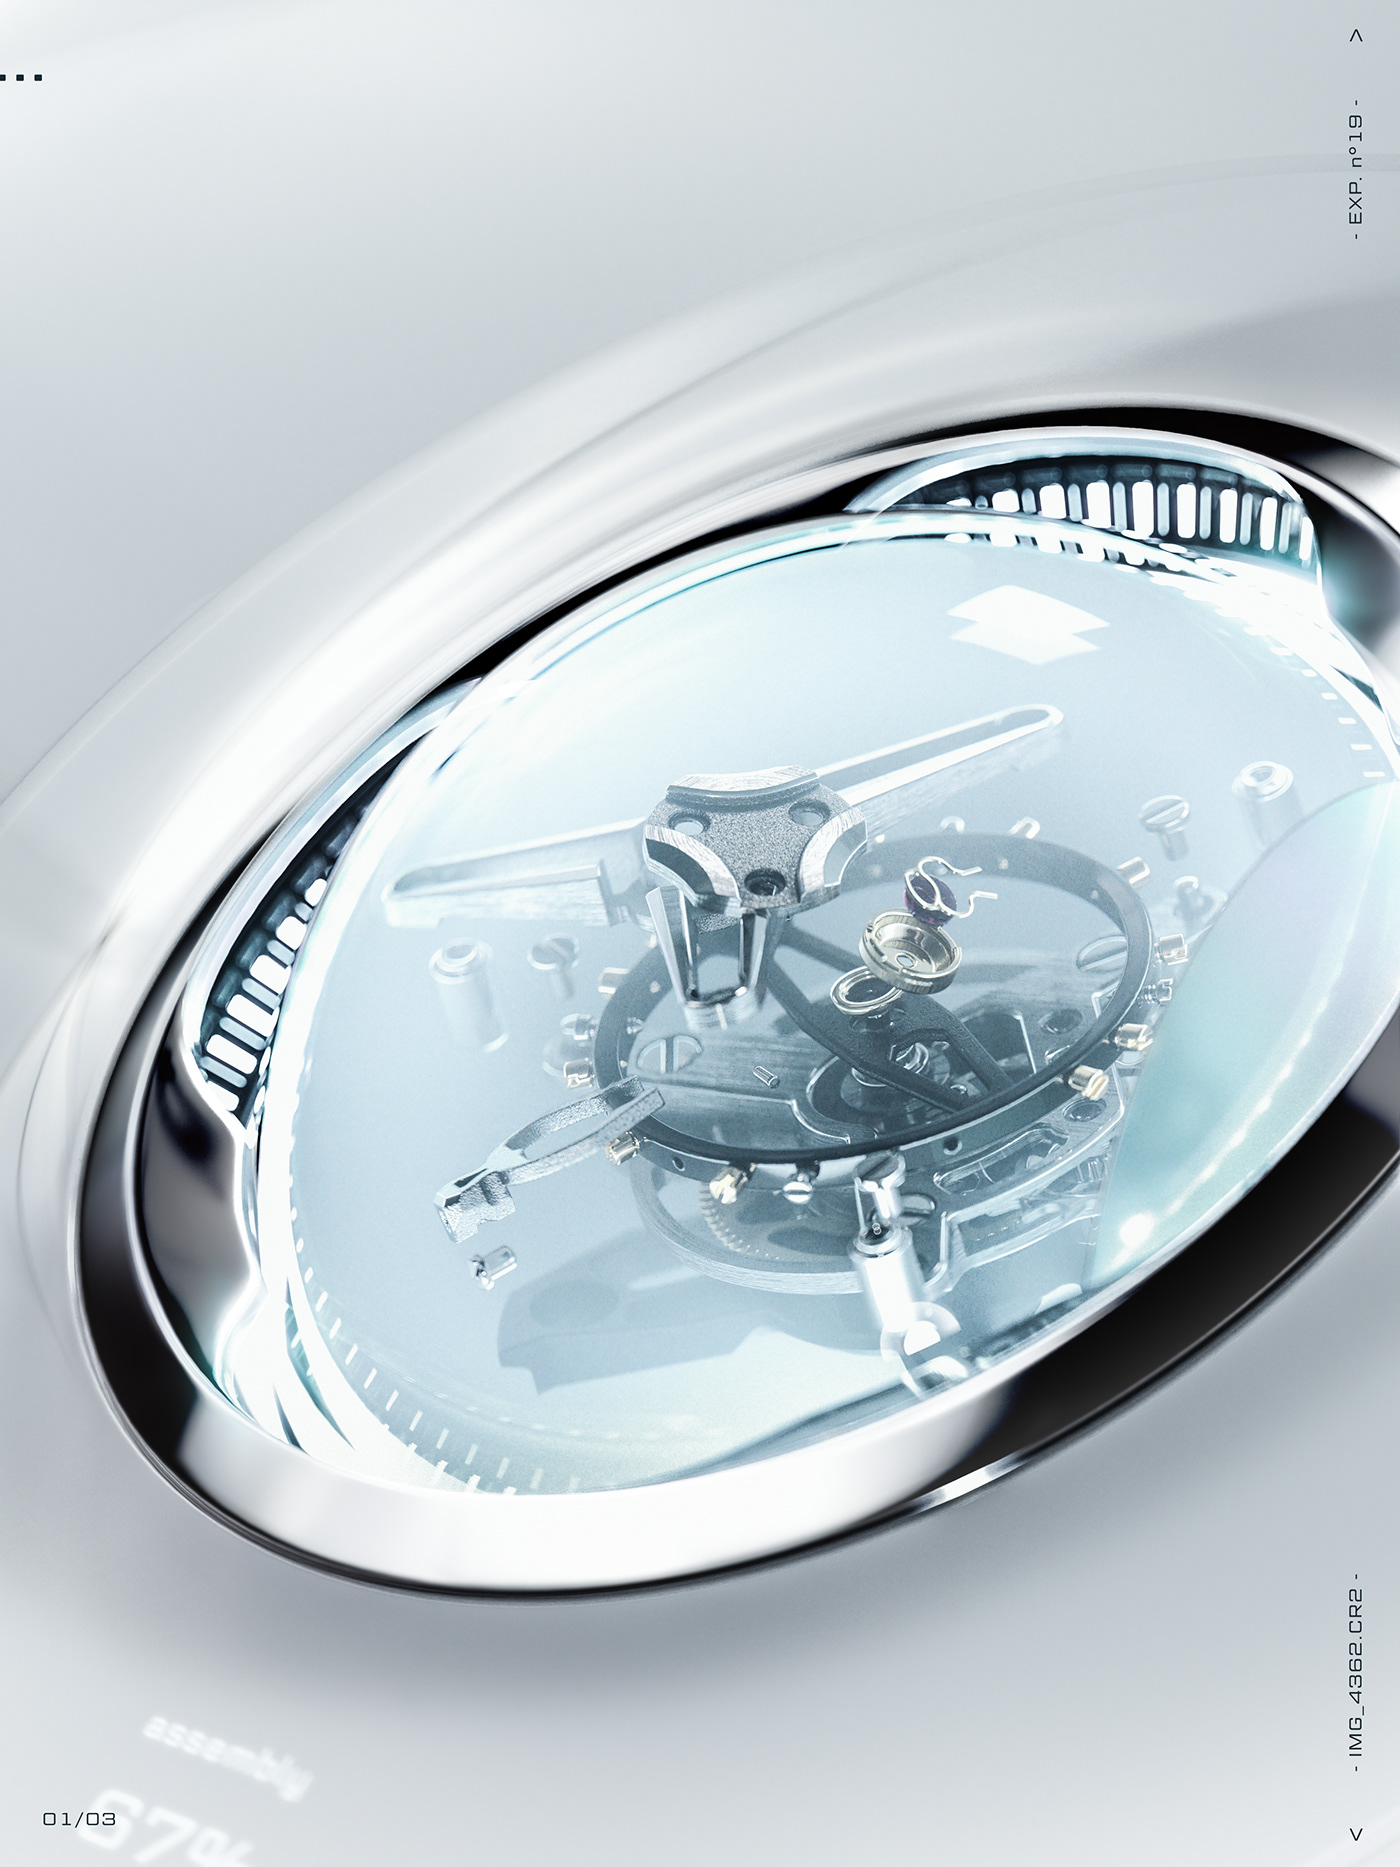 3D CGI concept future horology luxury mechanism thierry Vanguart watch